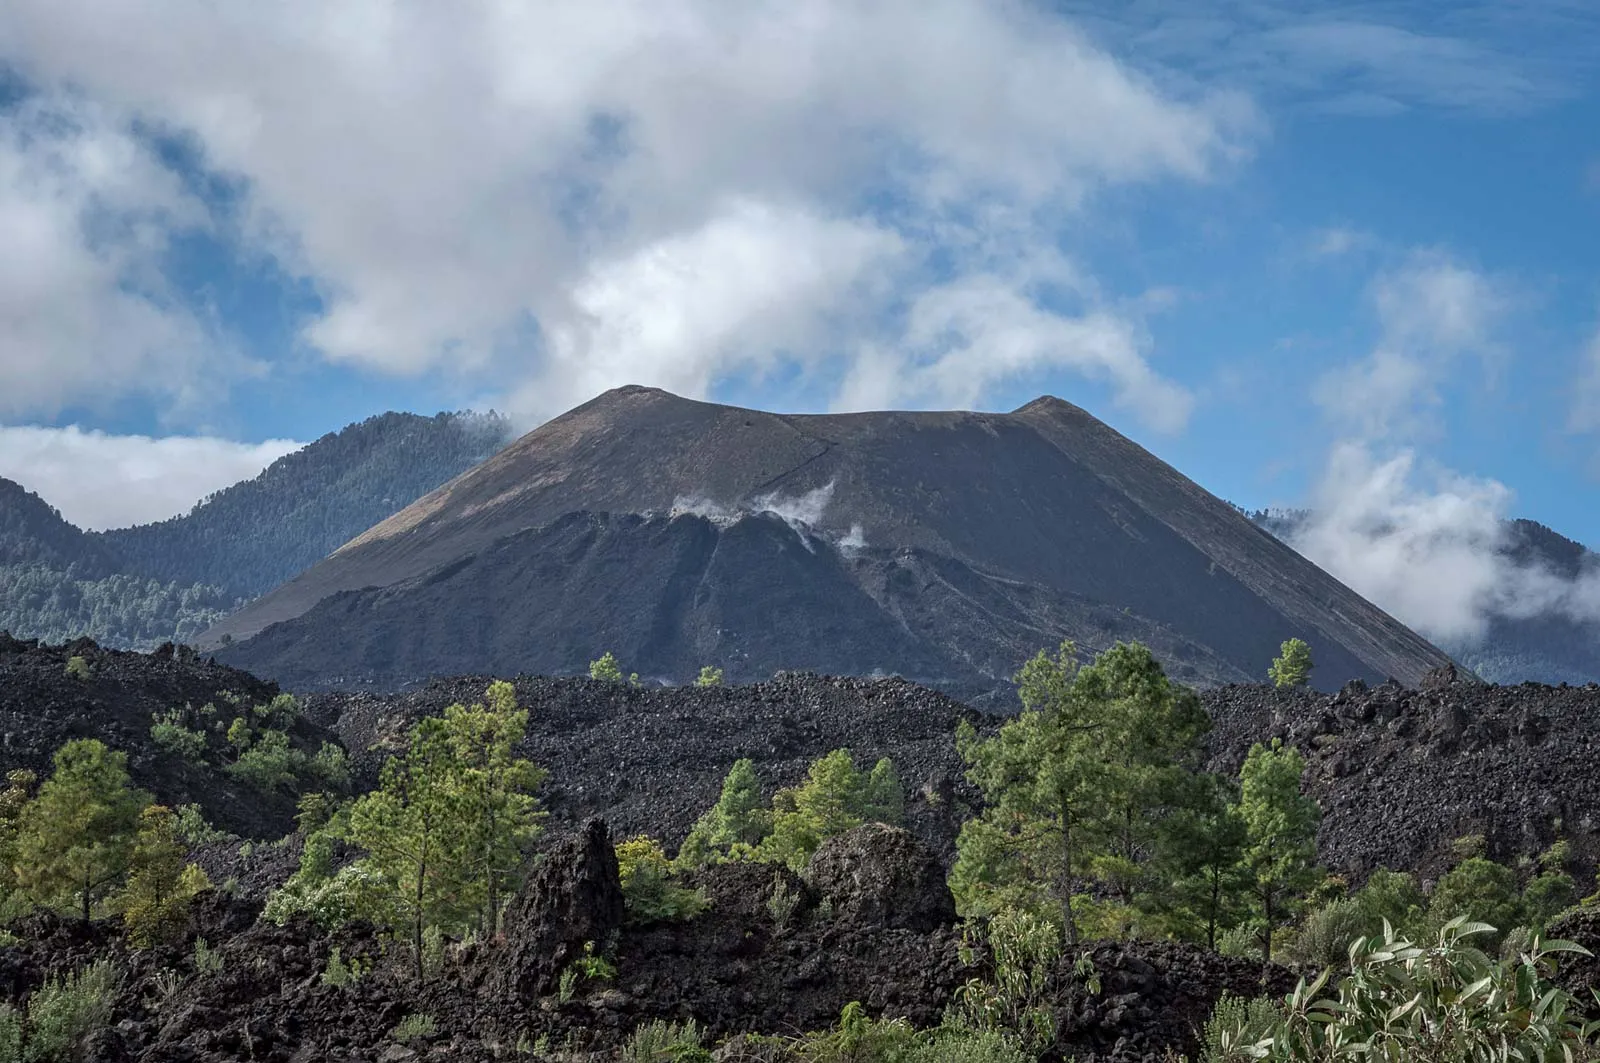 Paricutín: Mexico's Marvelous Volcano Still Amazes